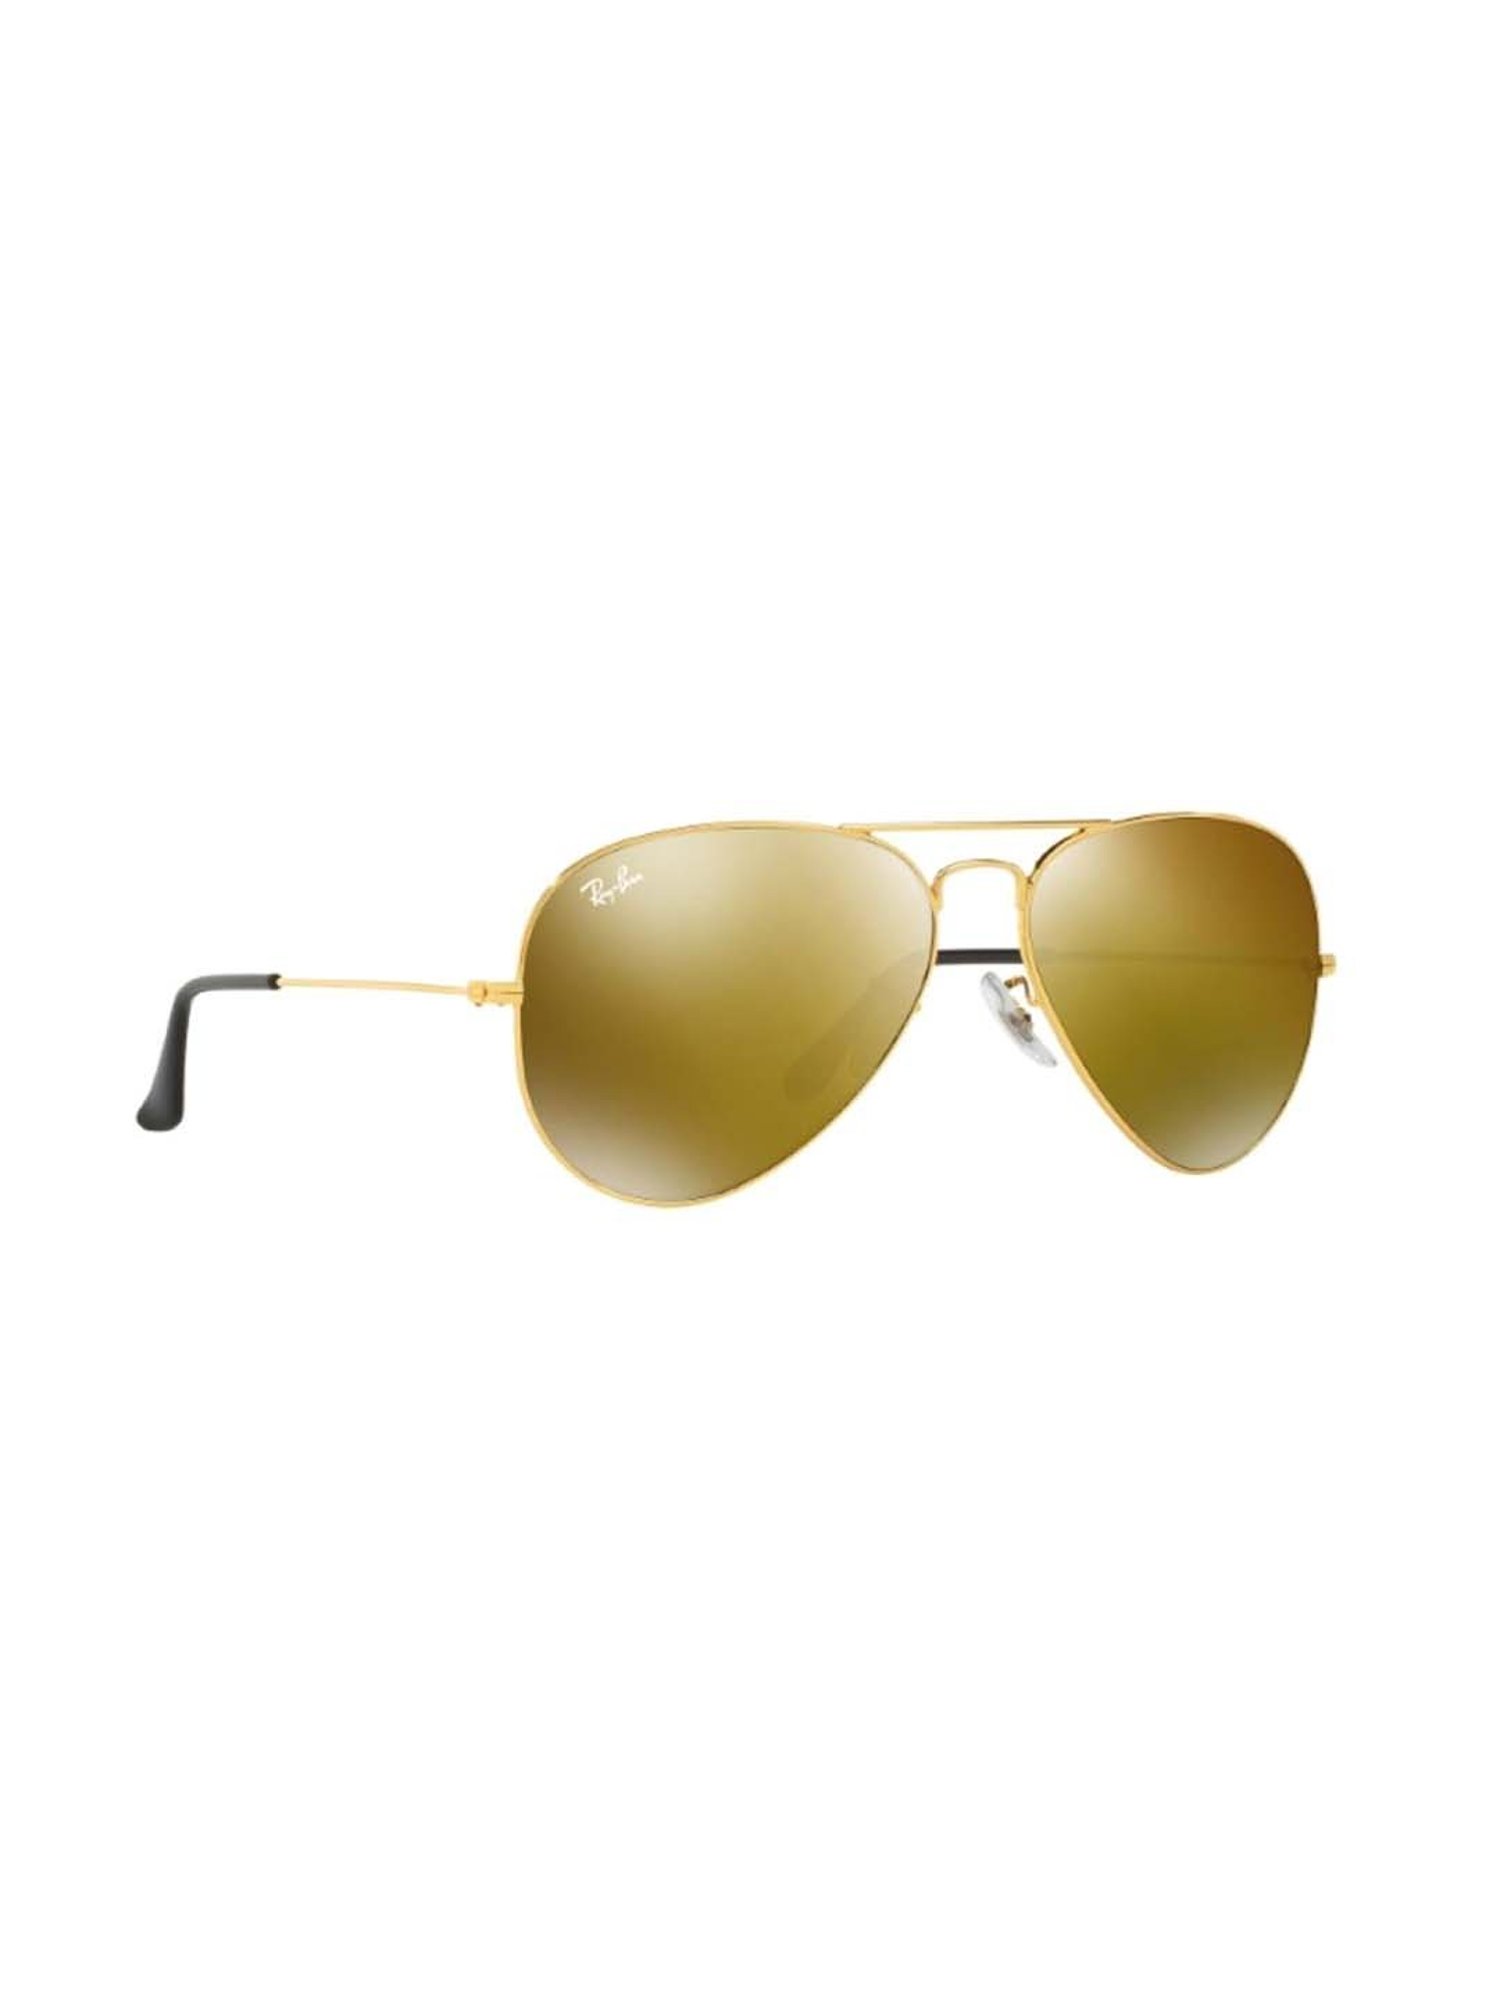 FunkyTradition Golden Brown Shade Aviator Sunglasses